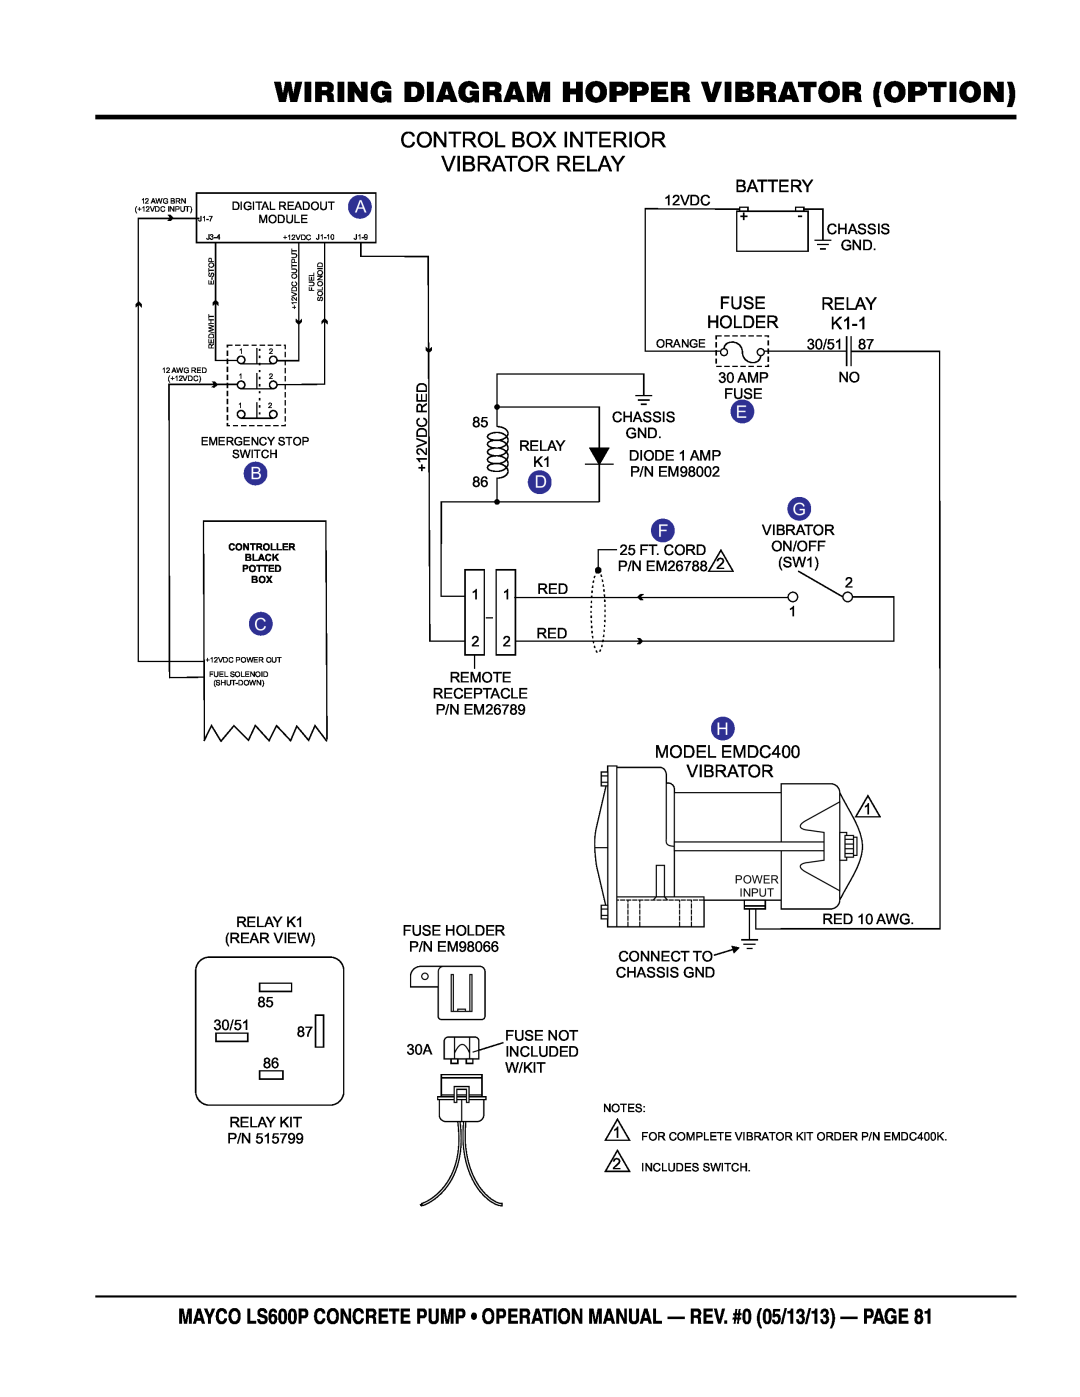 Multiquip LS600P operation manual wiring diagram HOPPER VIBRATOR option, Control Box Interior Vibrator Relay 